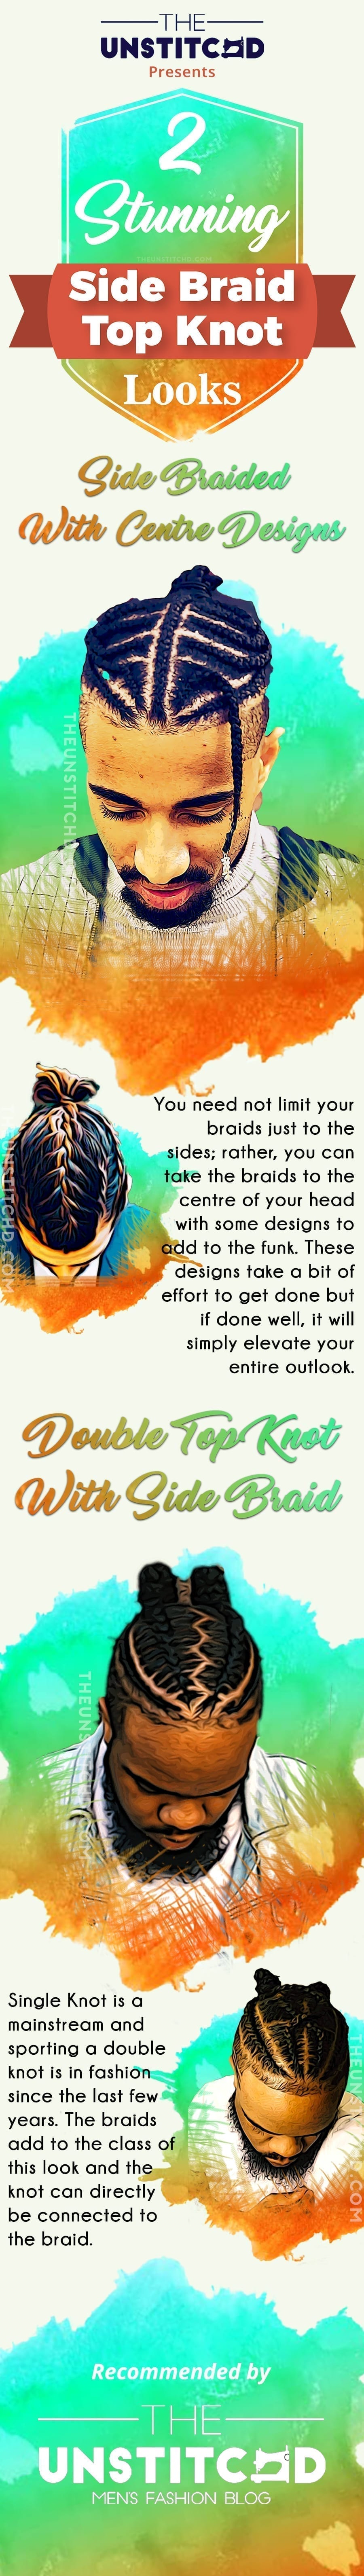 Side-Braid-top-knot-info